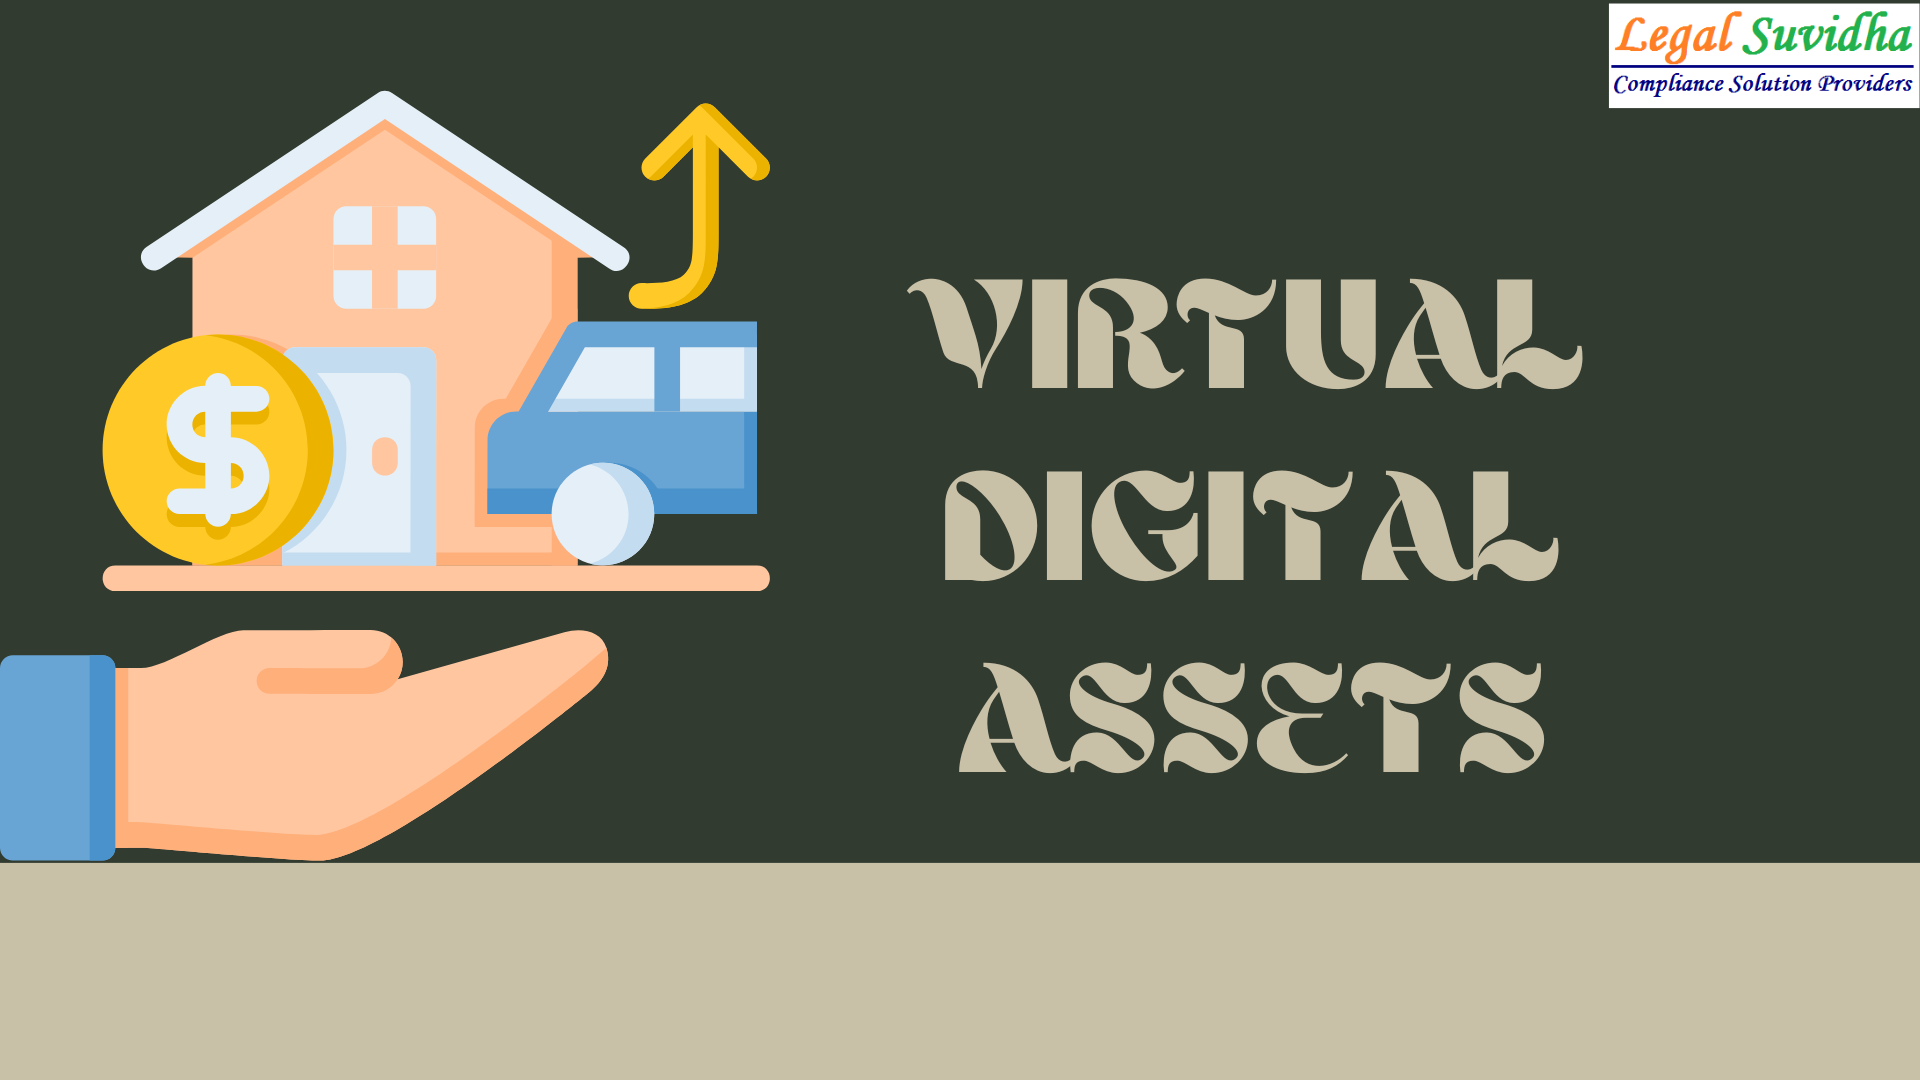 Taxation on Virtual Digital Assets